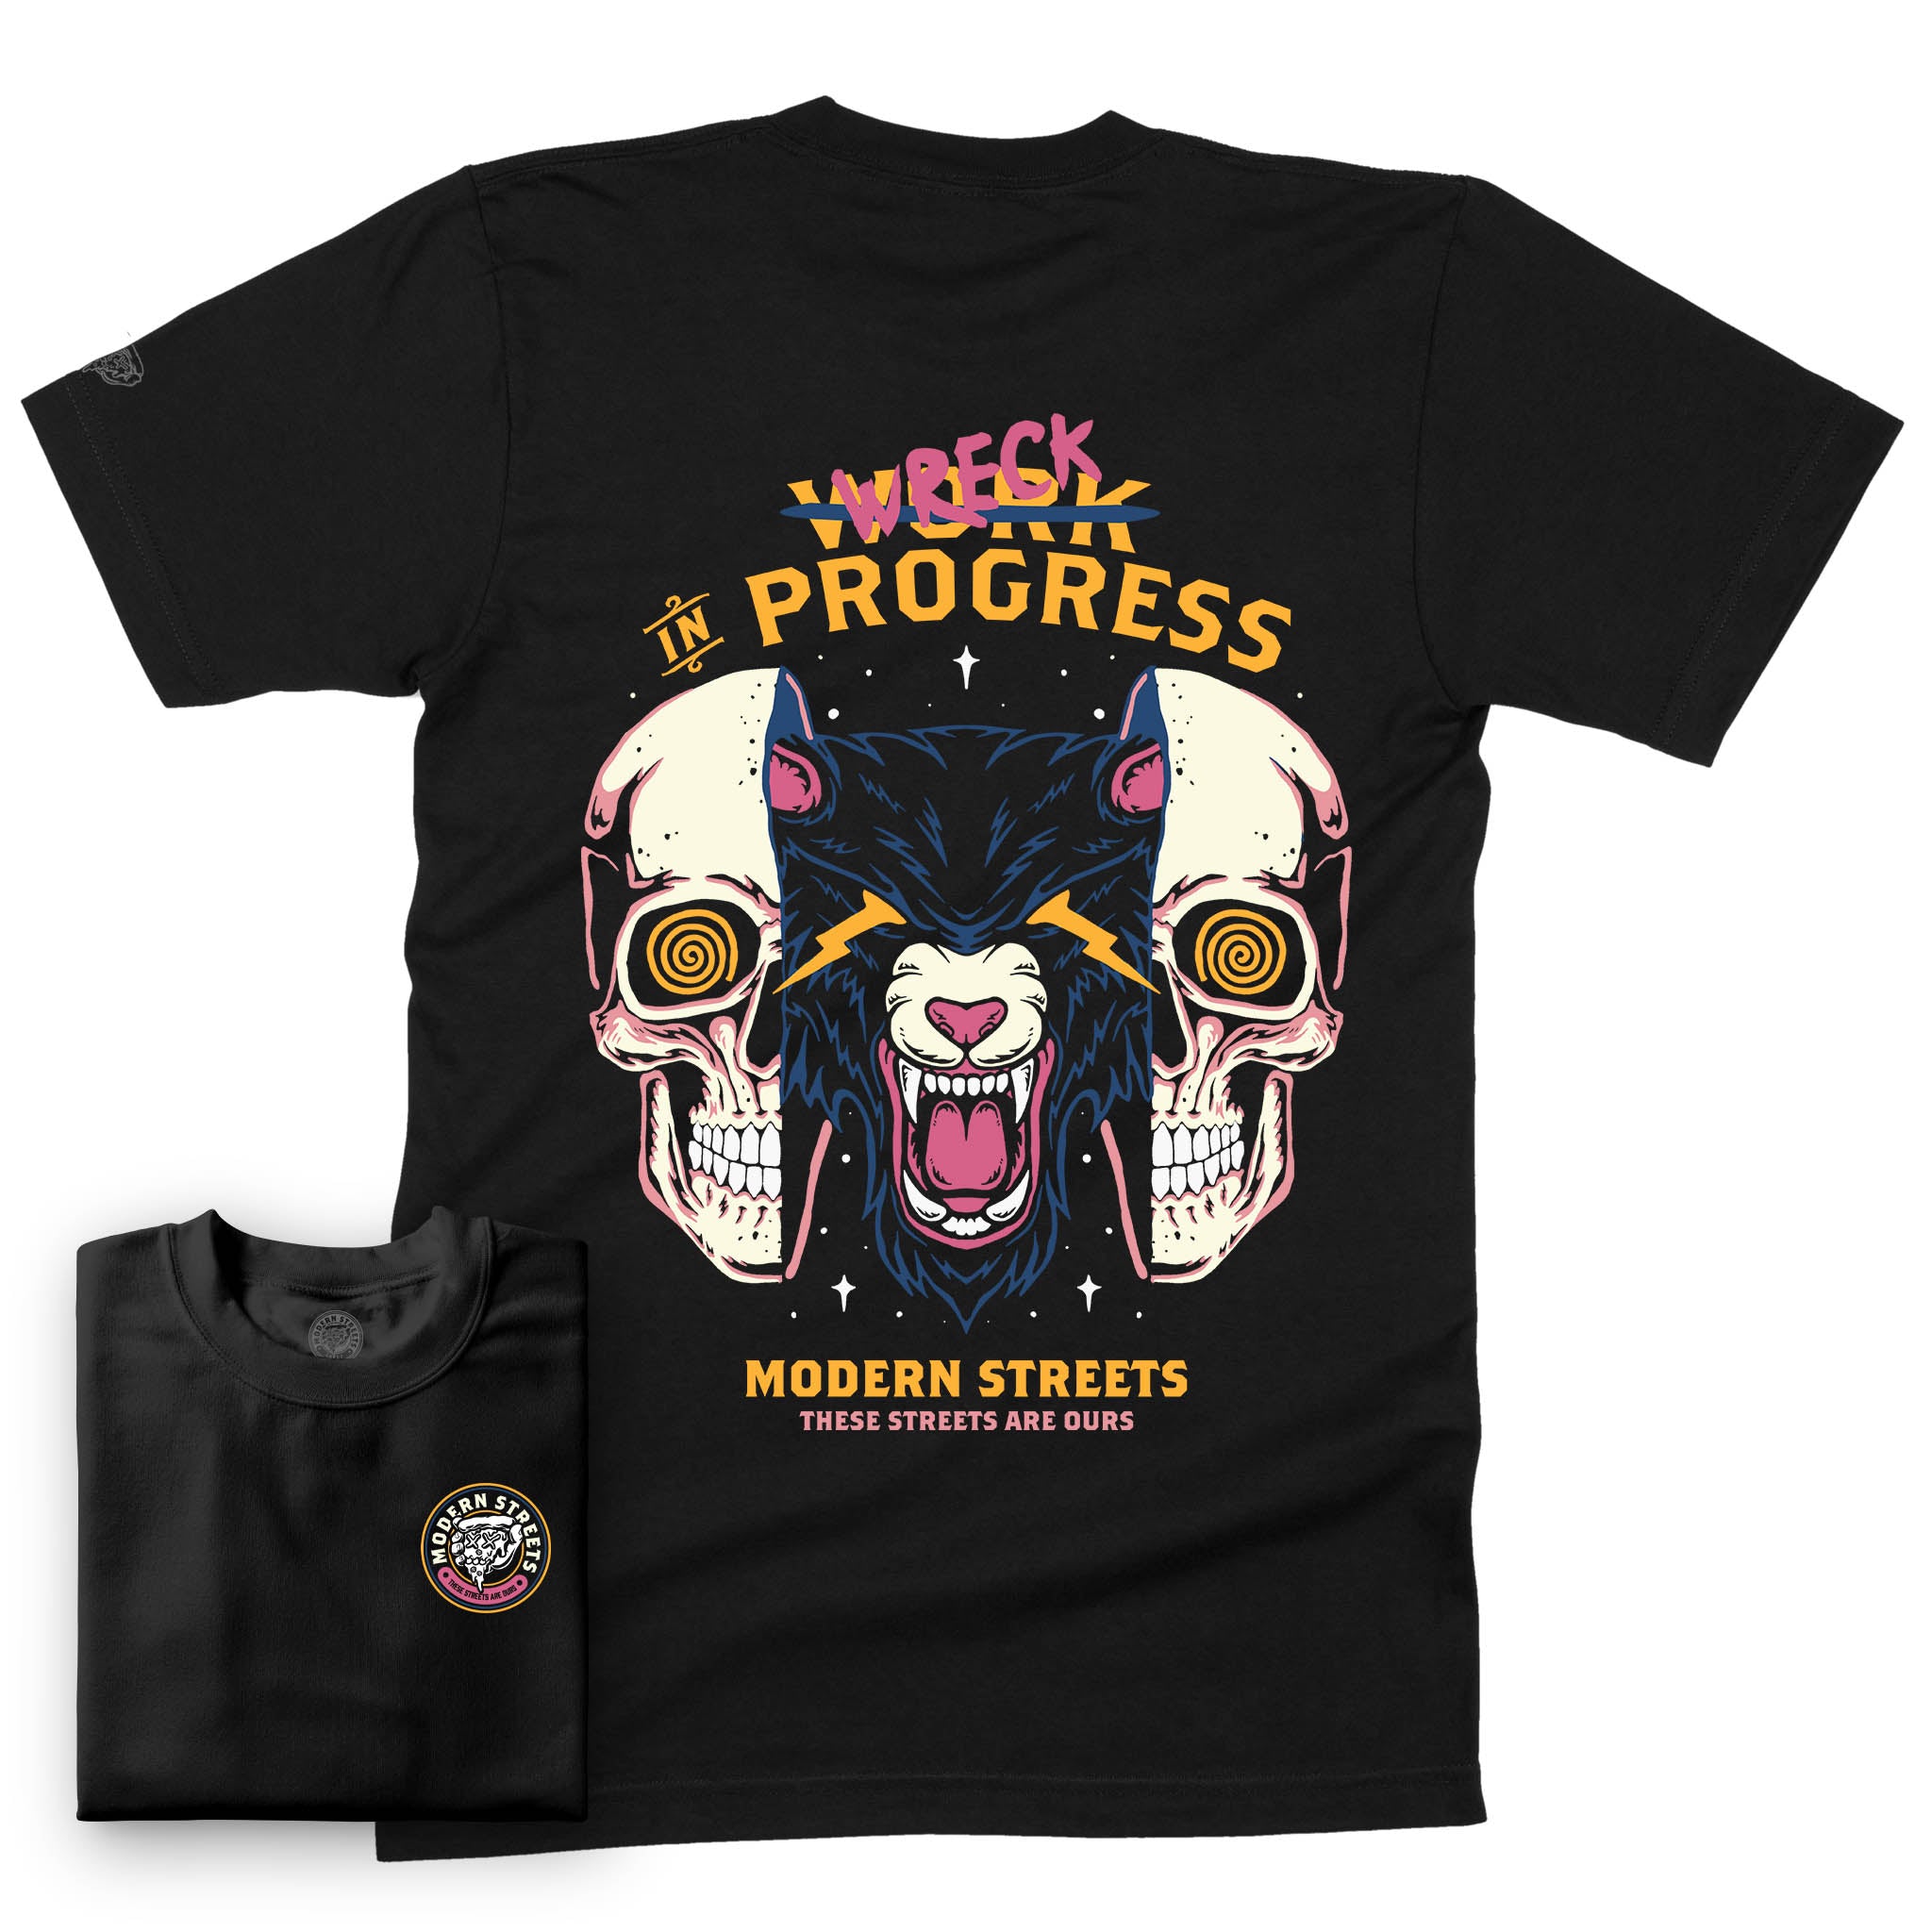 Wreck In Progress T-Shirt